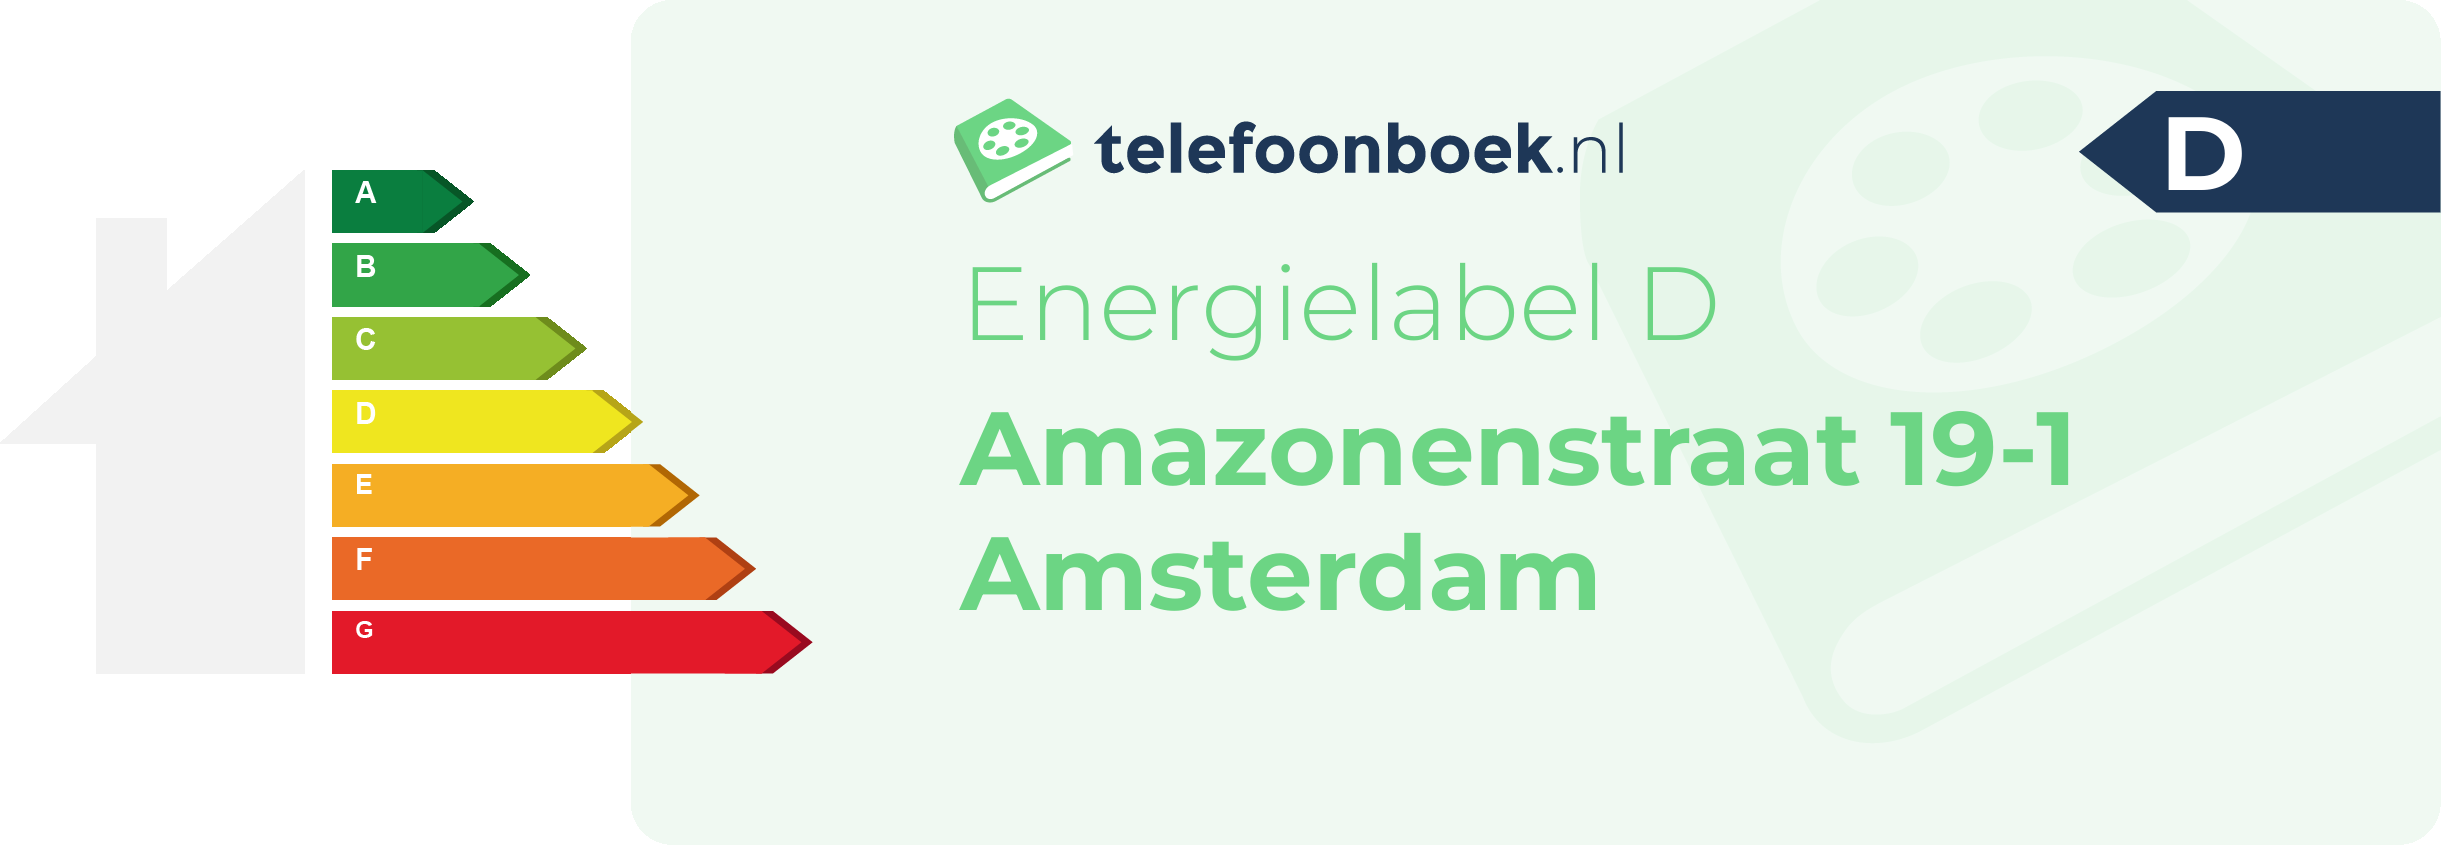 Energielabel Amazonenstraat 19-1 Amsterdam